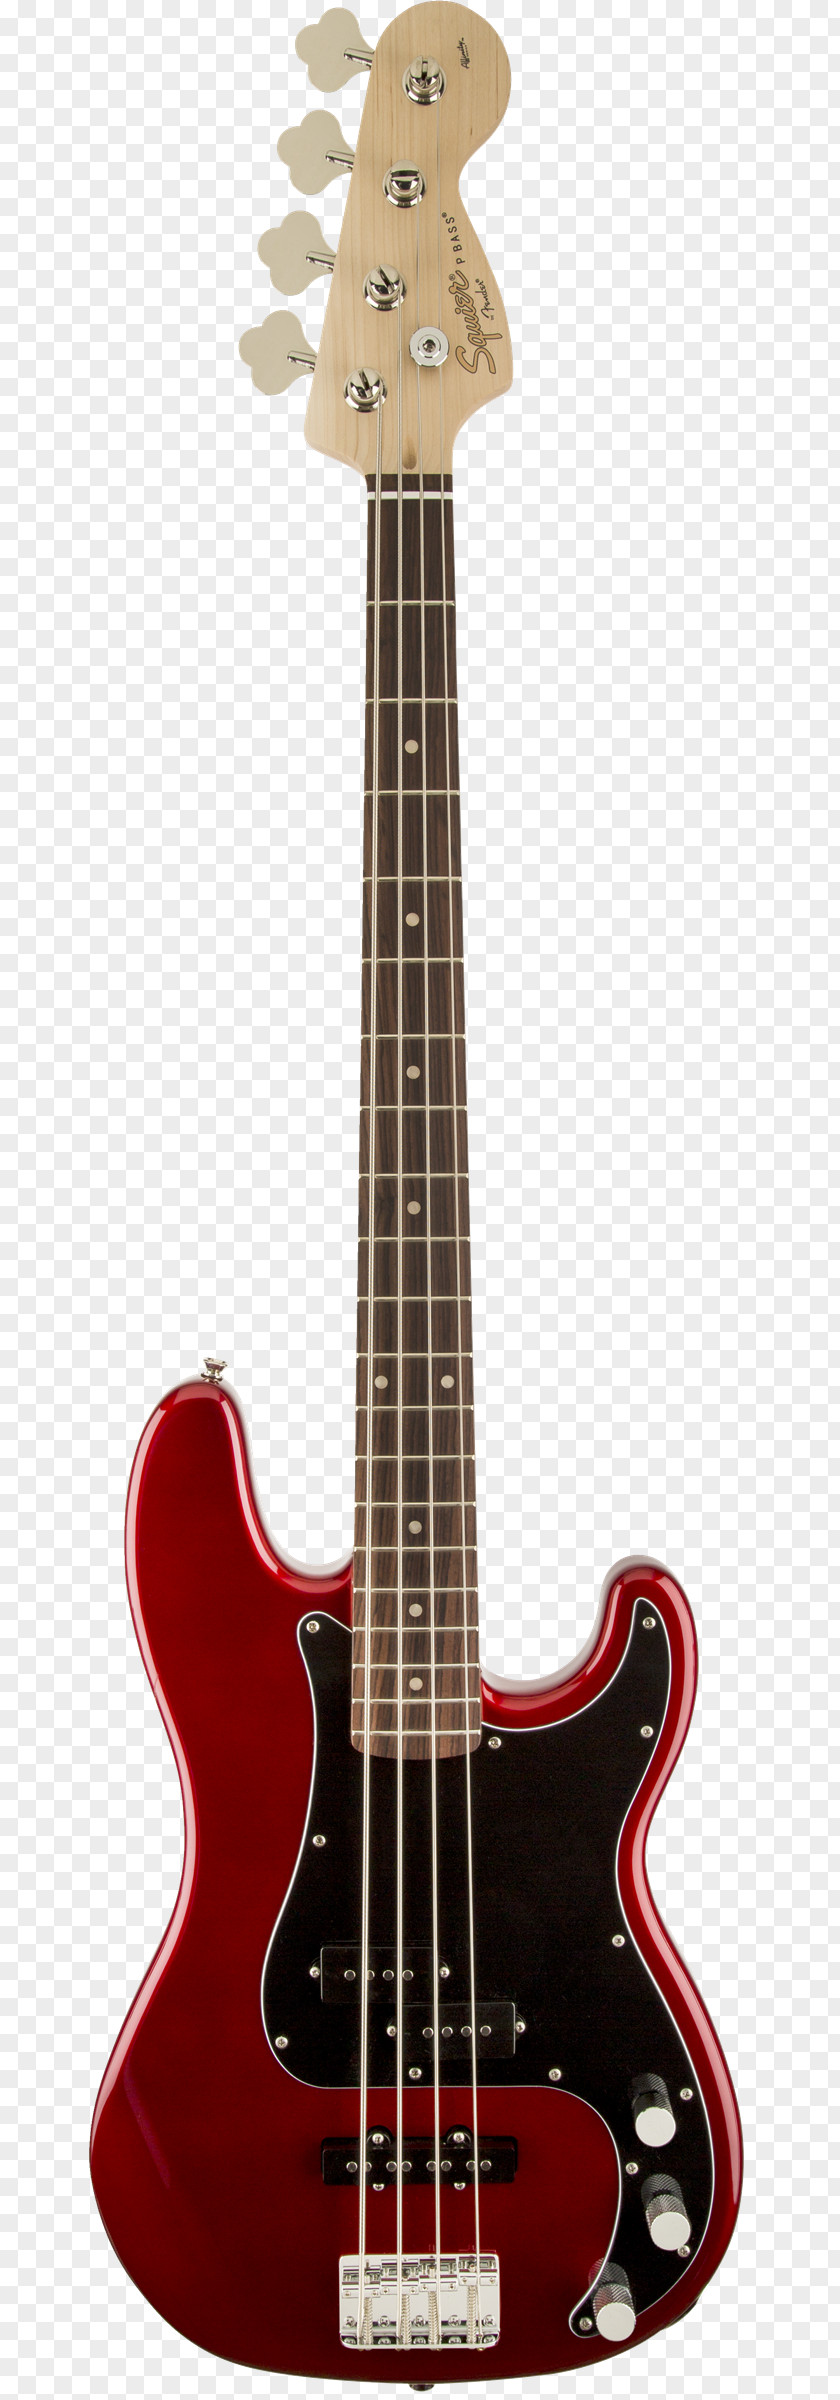 Bass Guitar Fender Precision Mustang Jaguar Squier PNG